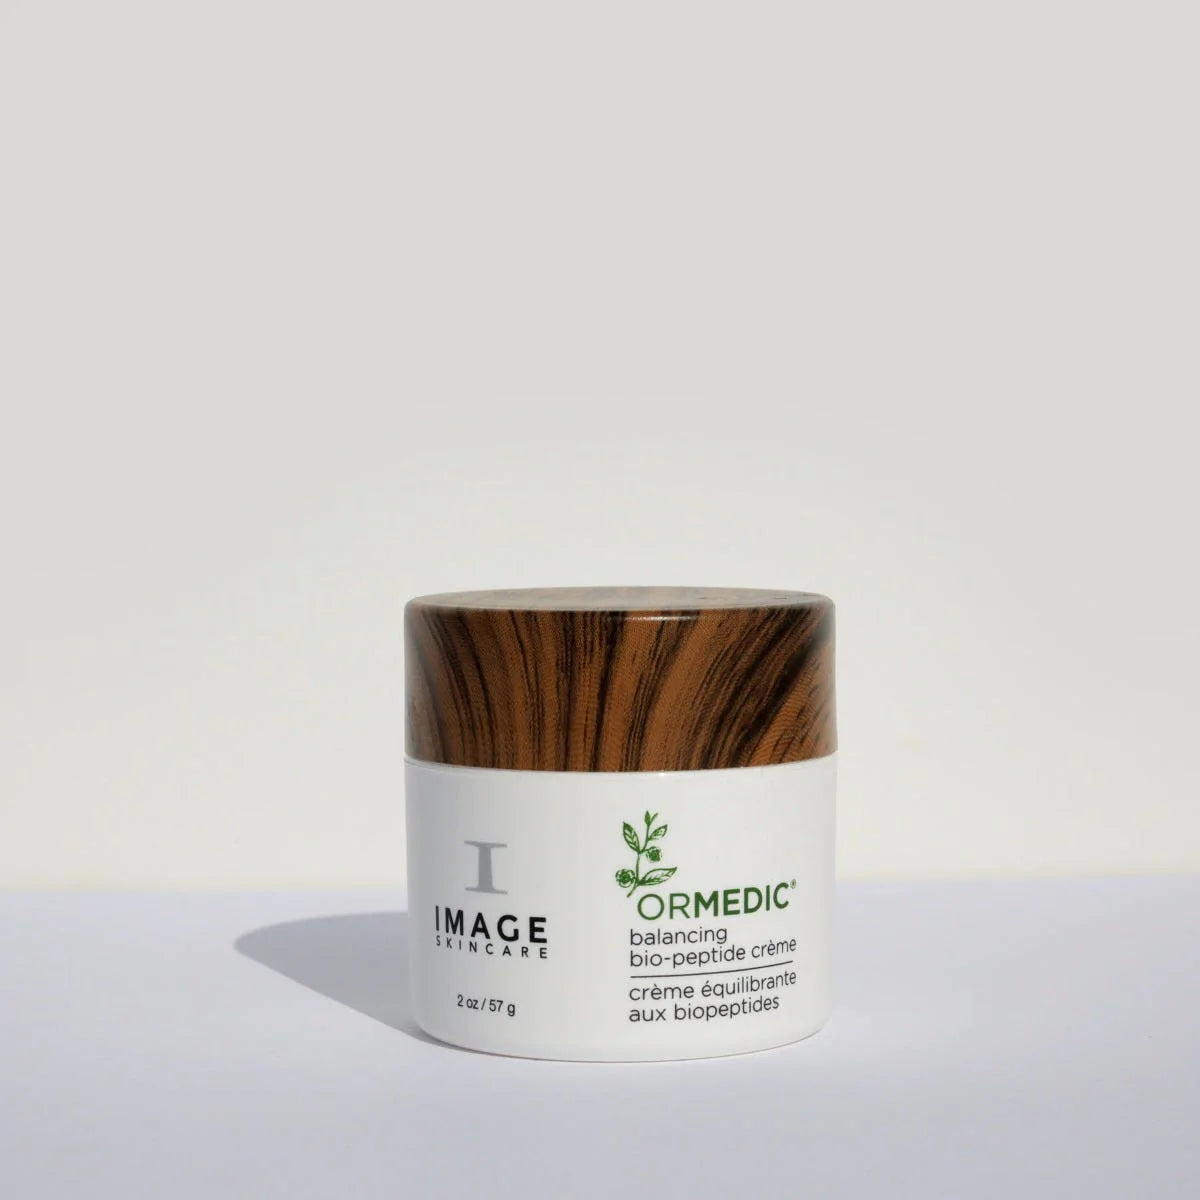 Image Skincare ORMEDIC balancing biopeptide crème